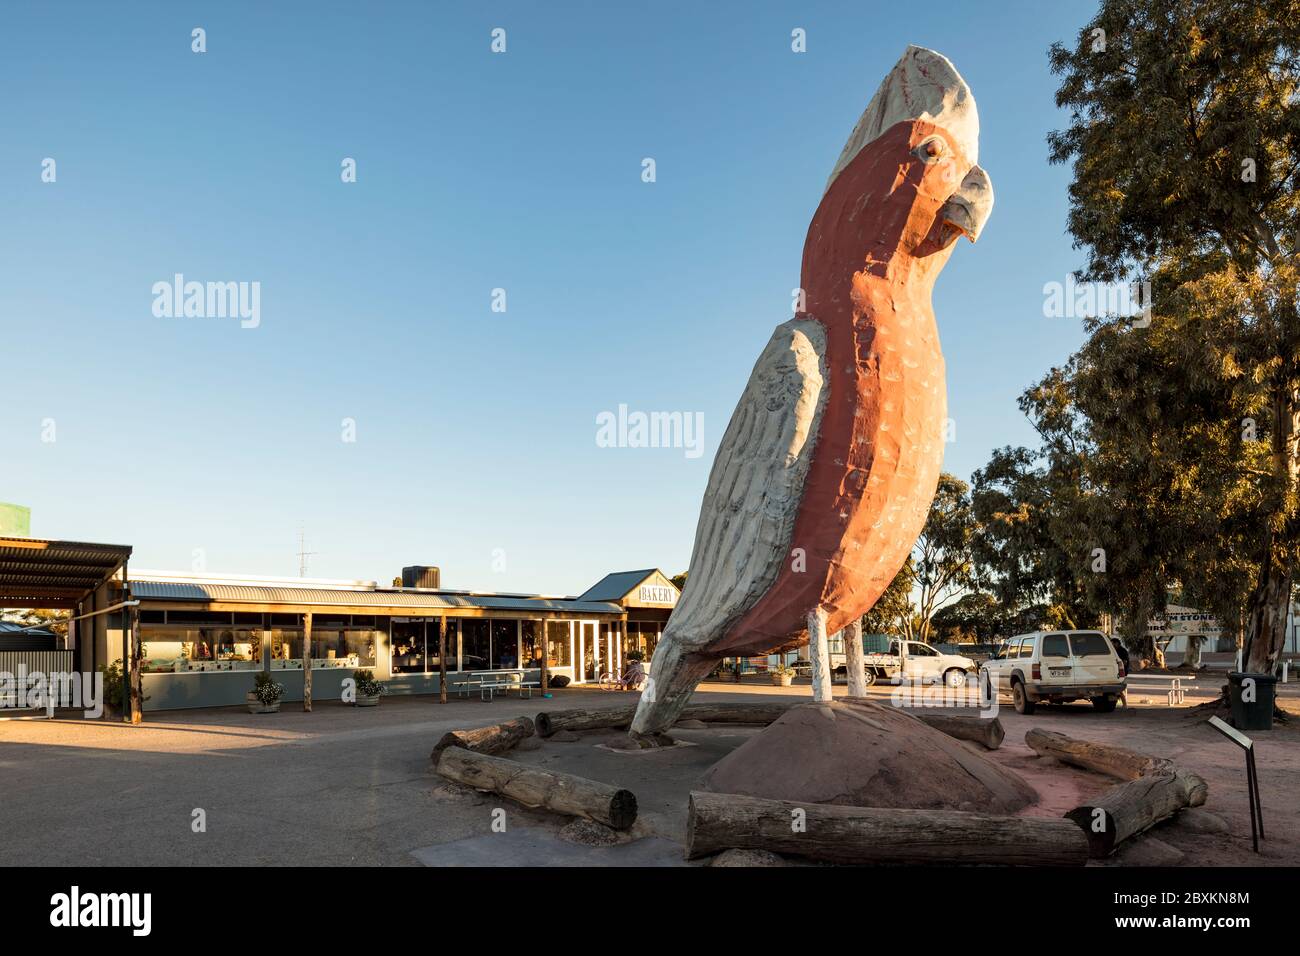 Kimba South Australia September 13th 2019 : Giant wooden galah sculpture in Kimba in South Australia, known as the halfway point across Australia Stock Photo